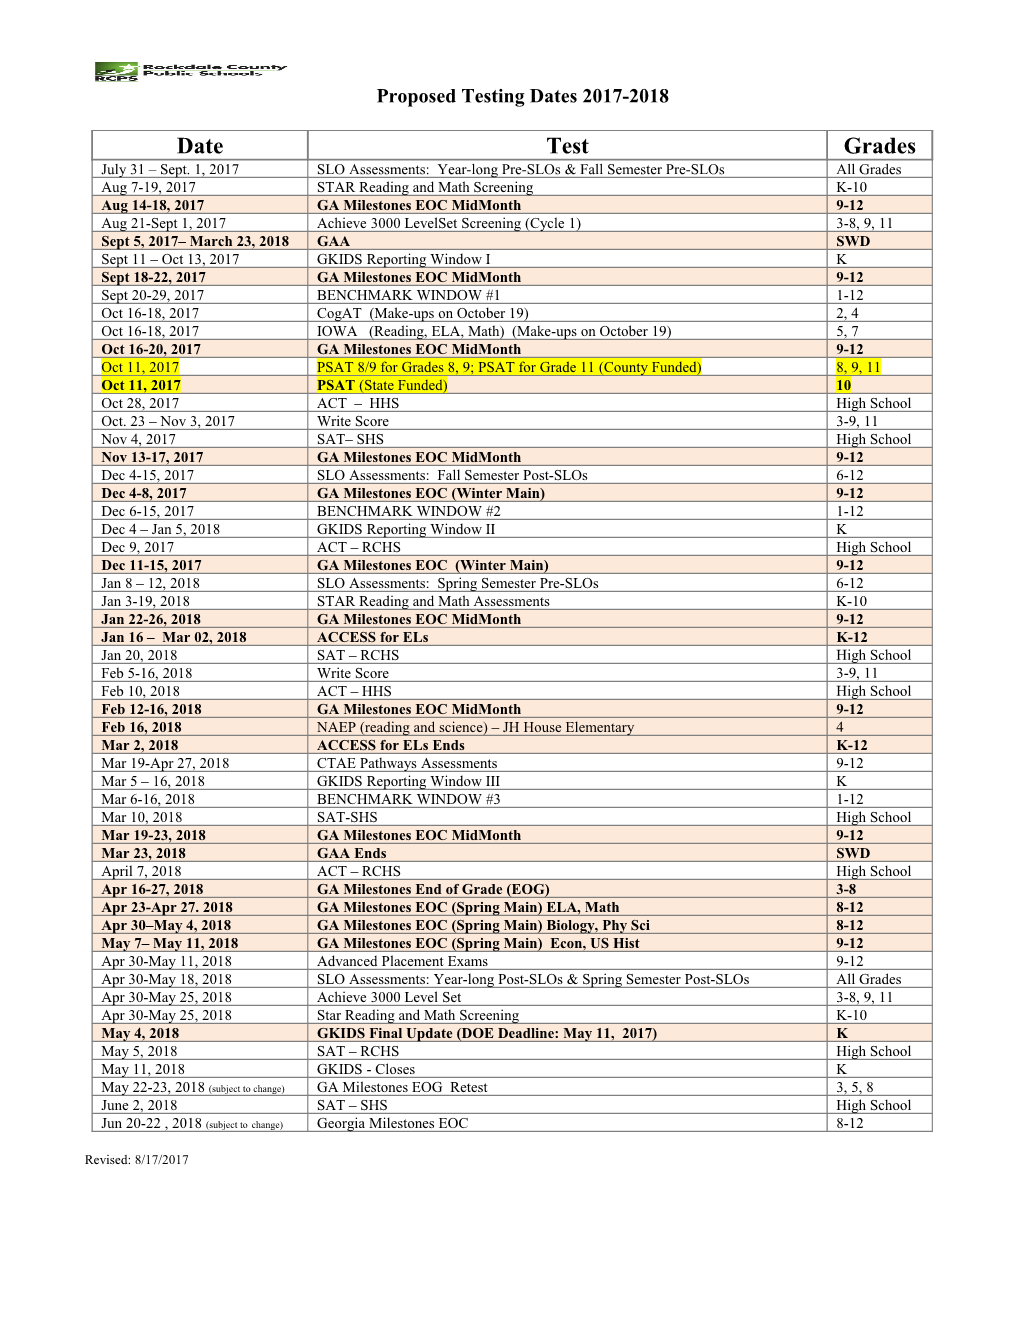 Proposed Testing Dates 2007-2008